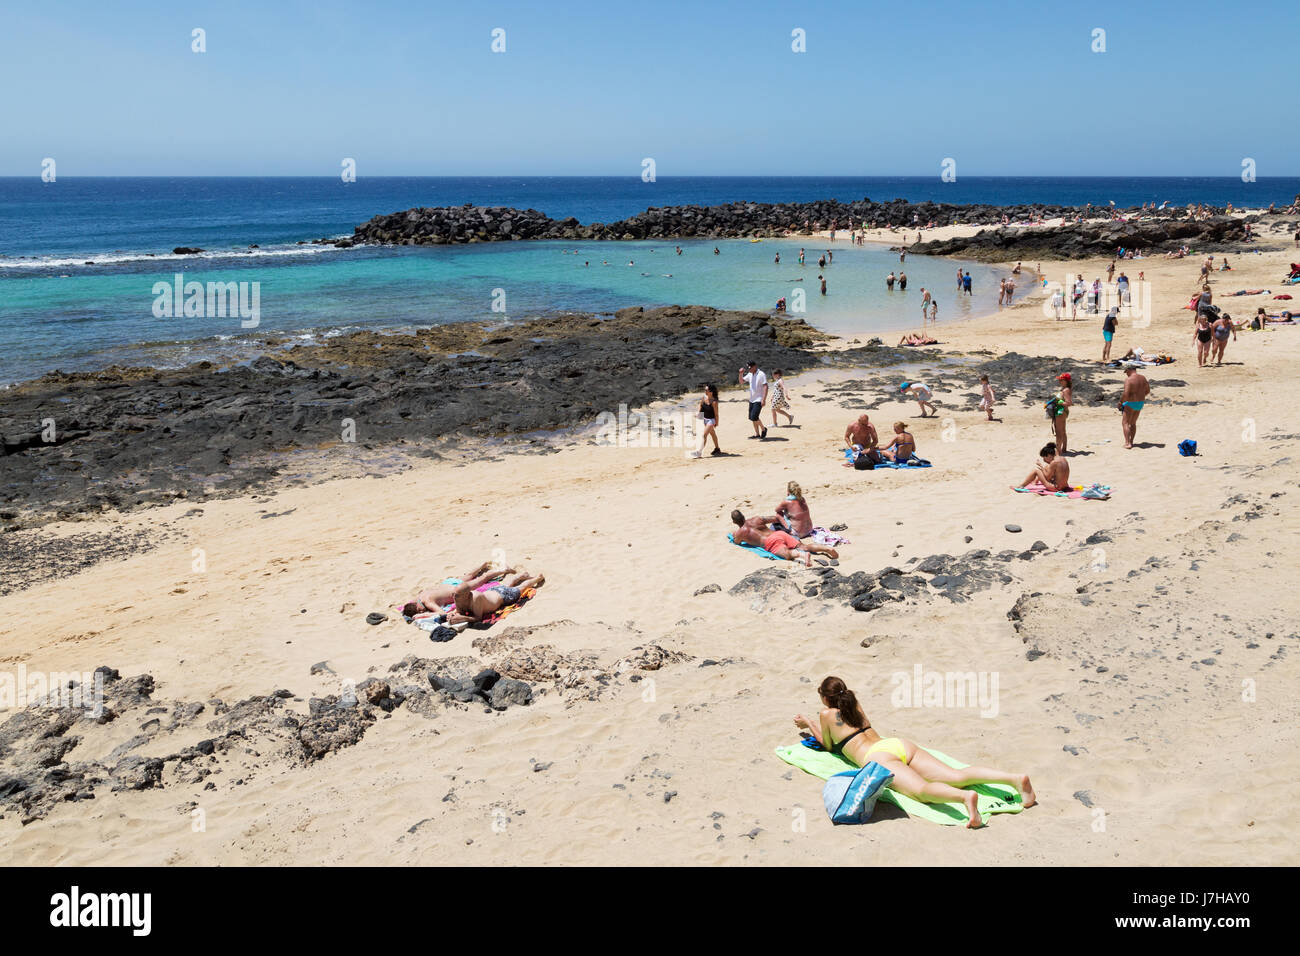 People sunbathing on a Lanzarote beach - Costa Teguise beach, Lanzarote, Canary Islands Europe Stock Photo